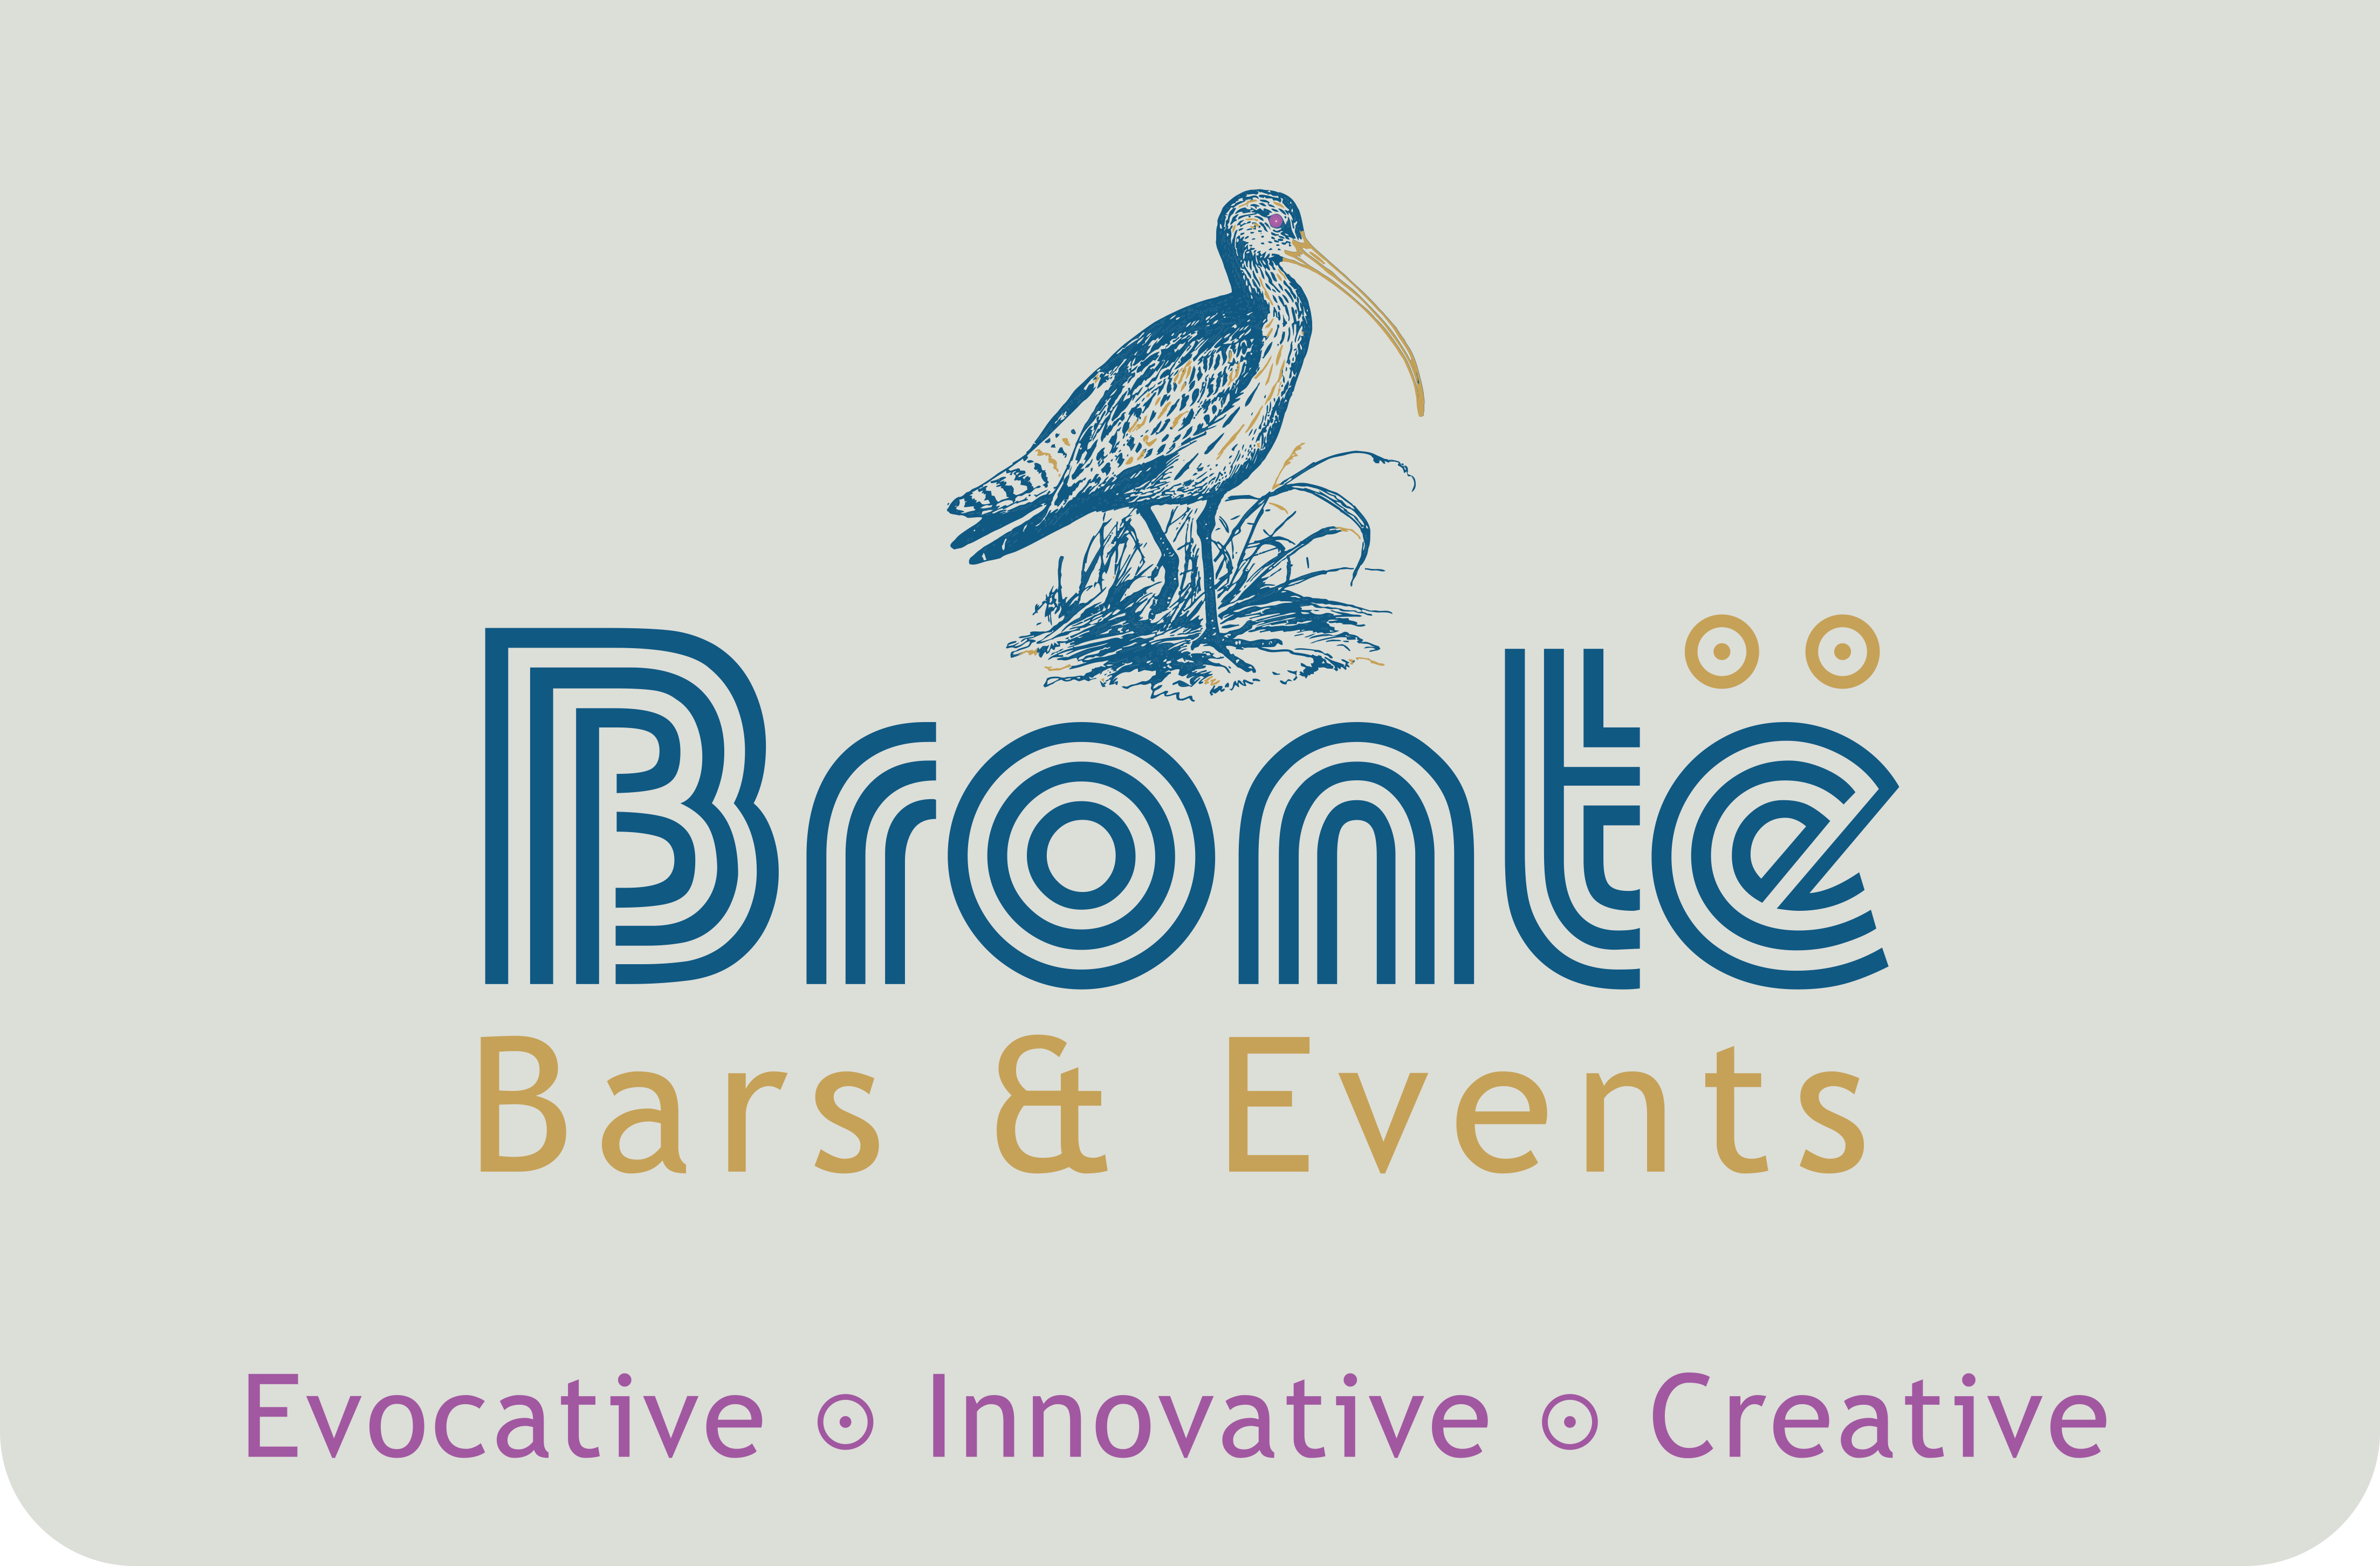 Bronte Bars & Events